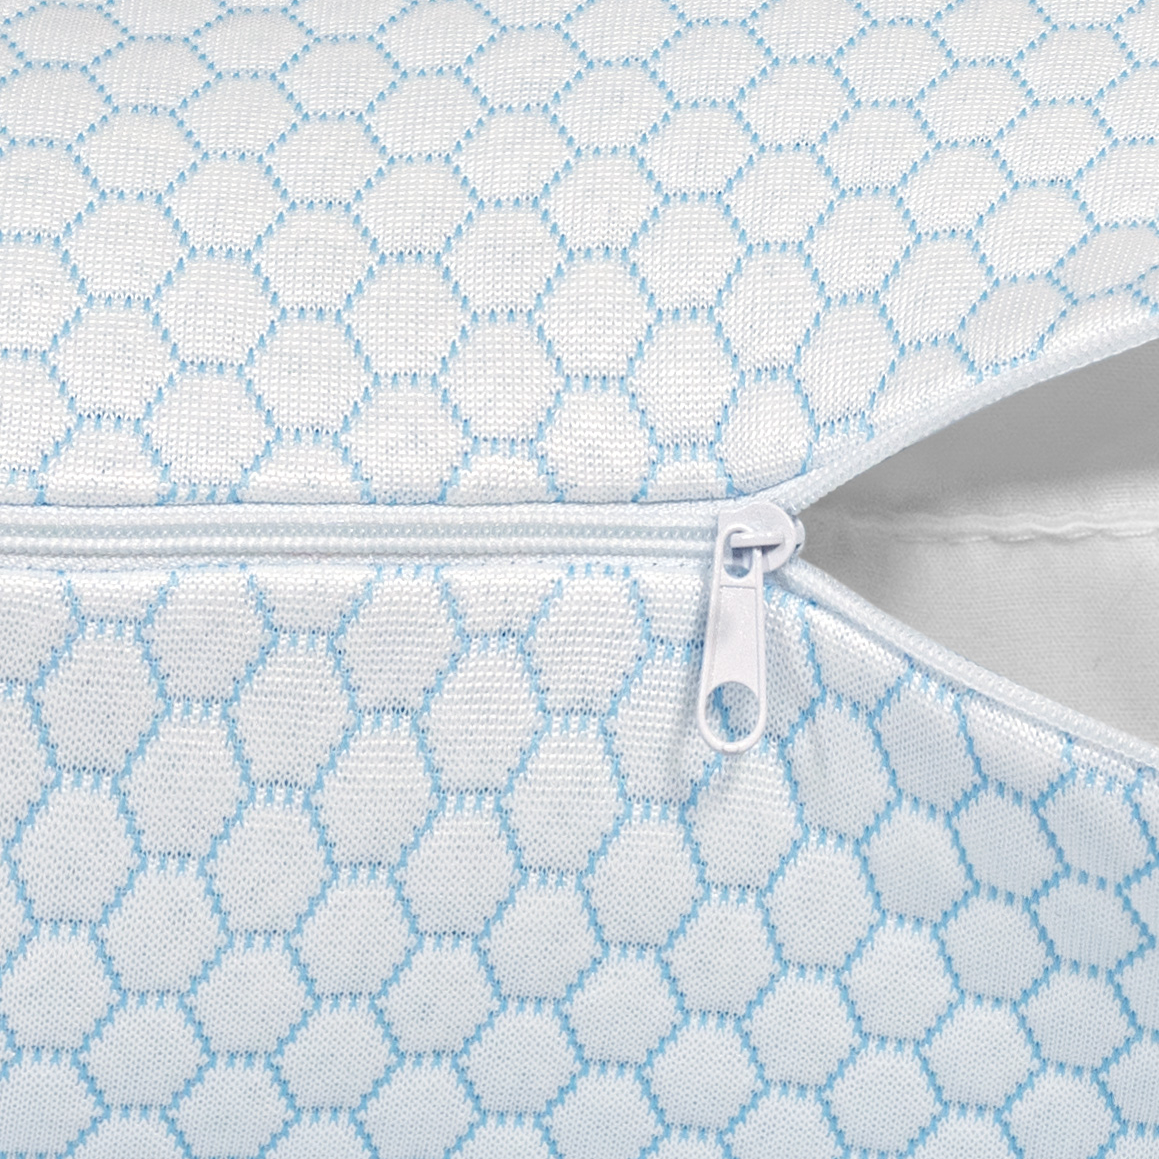 фото Защитный чехол для подушки medsleep fresh sleep белый с голубым 70х70 см